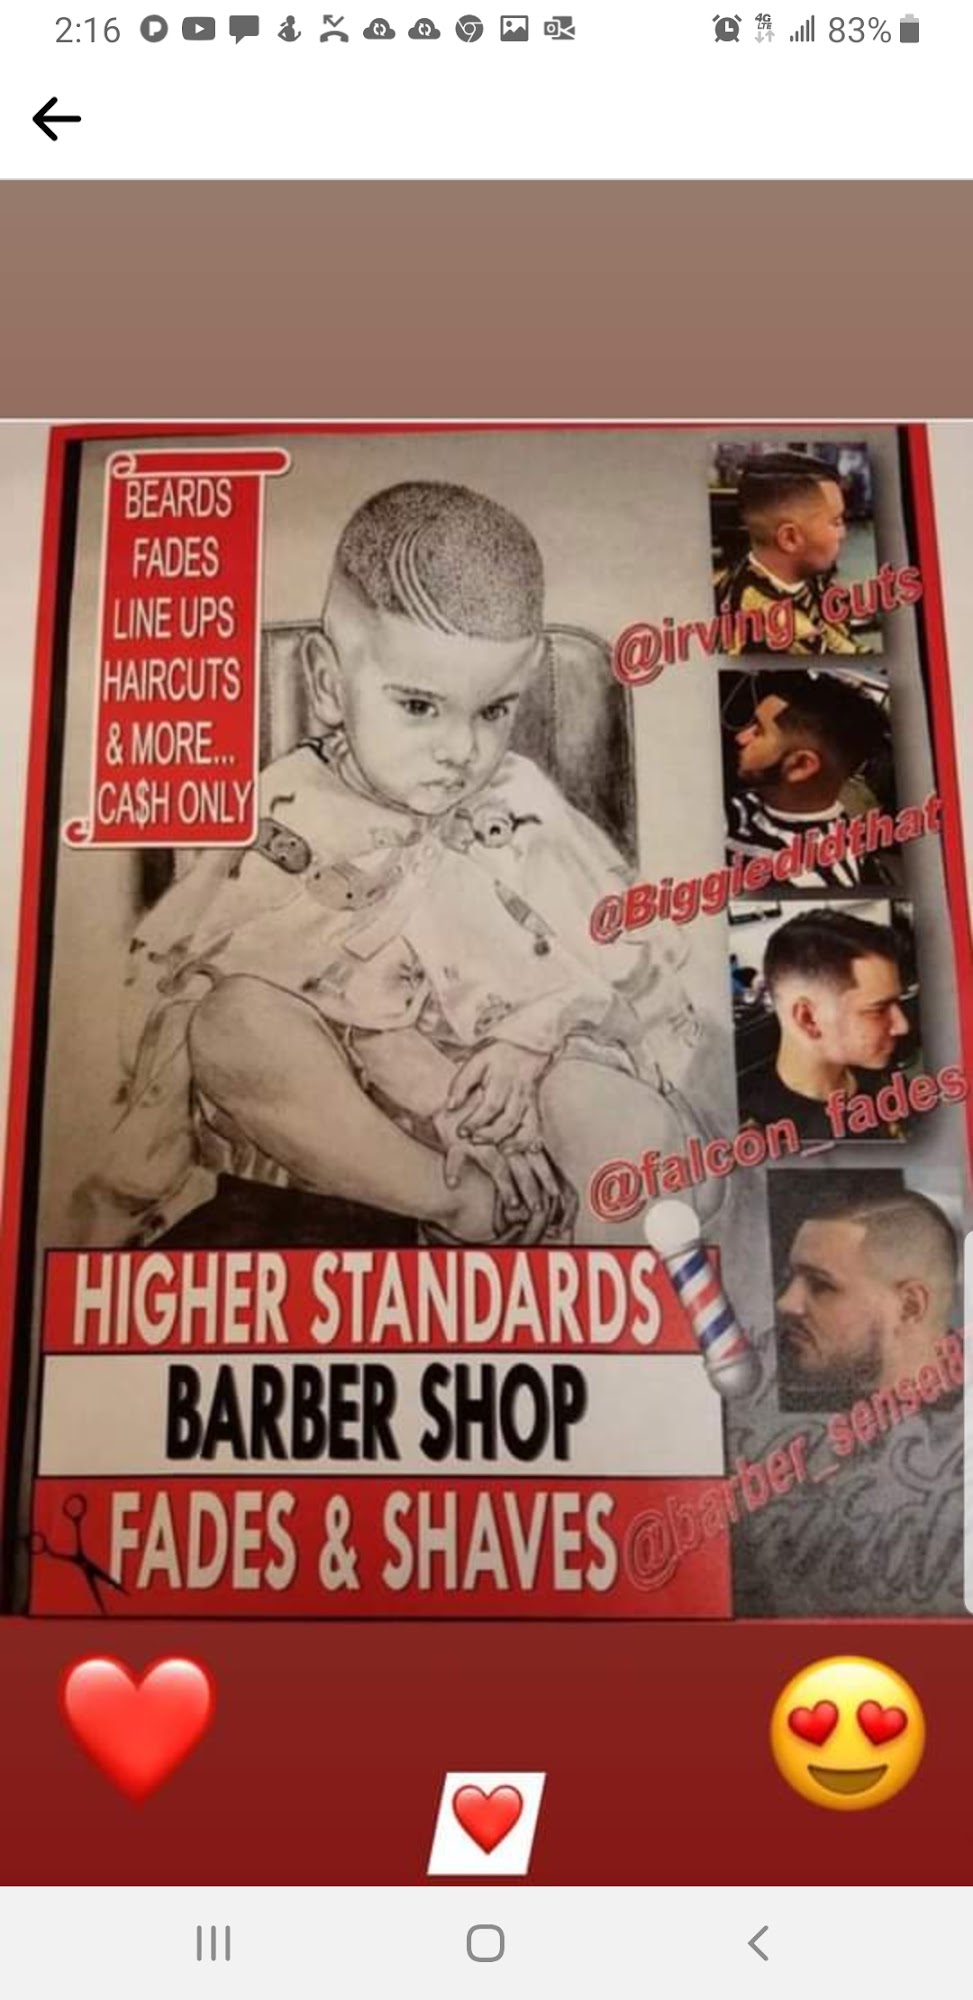 Higher Standards Barbershop